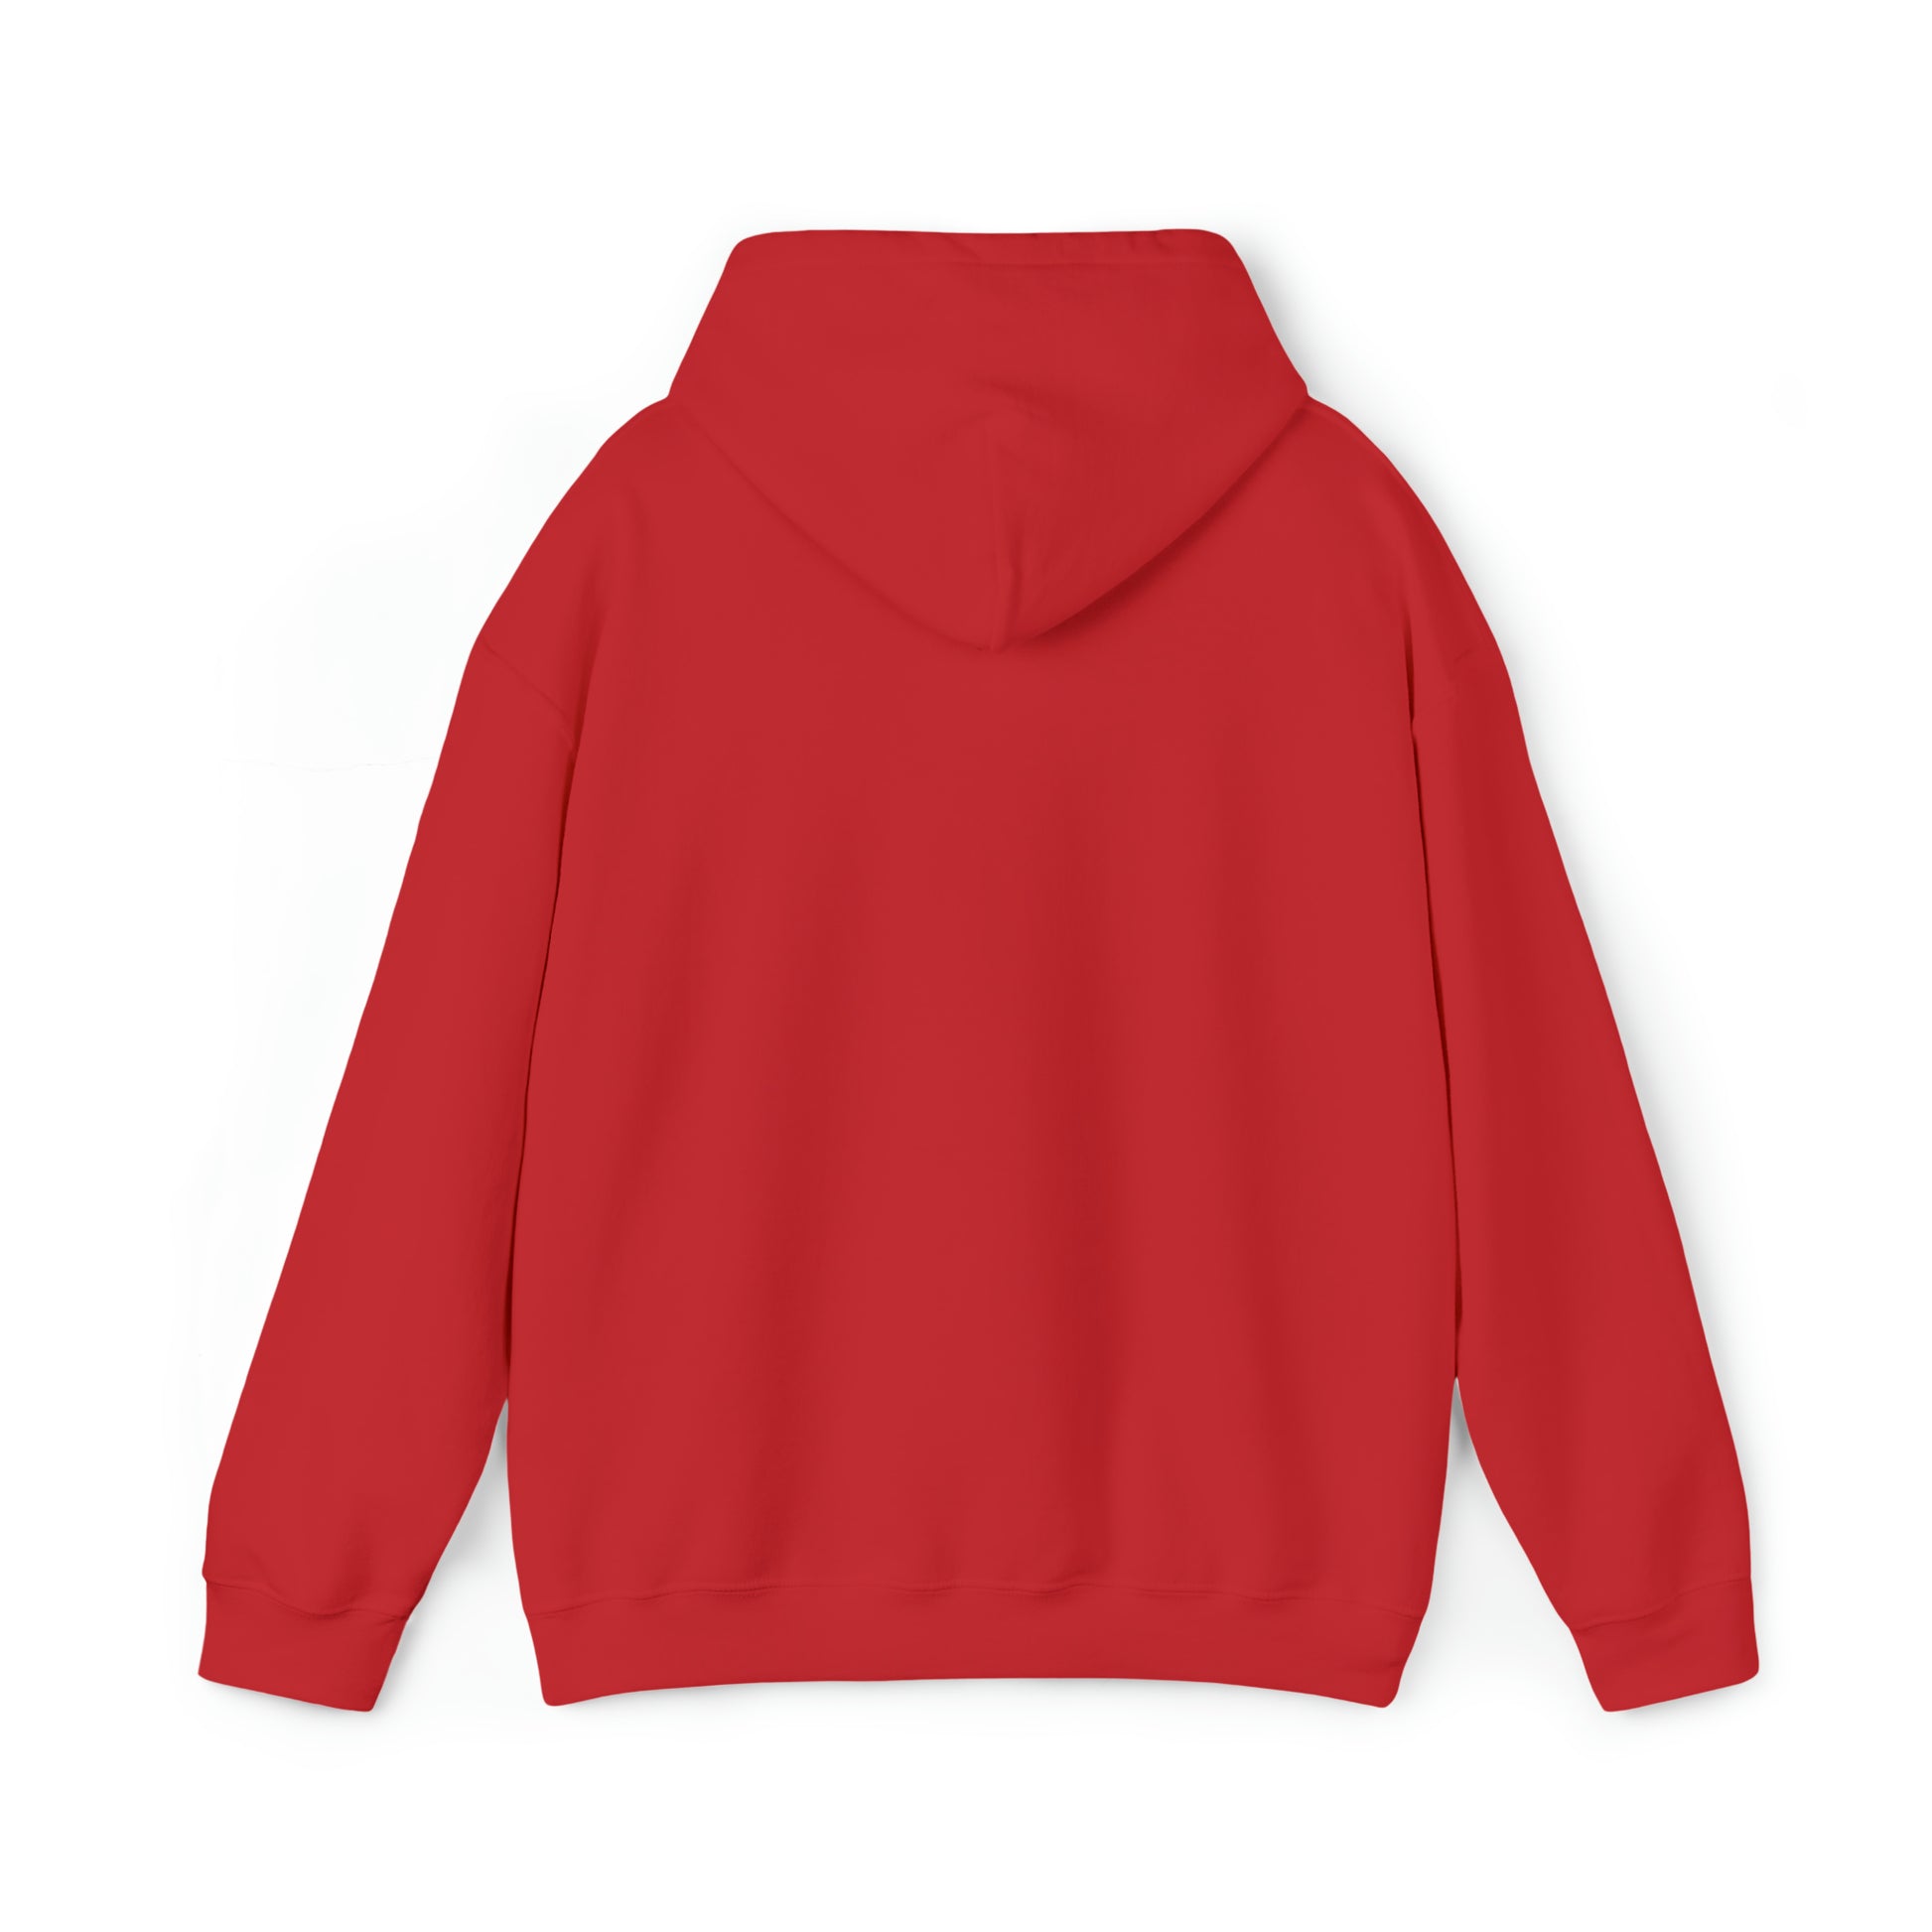 Hood Sweatshirts - Buy Hood Sweatshirts Online Starting at Just